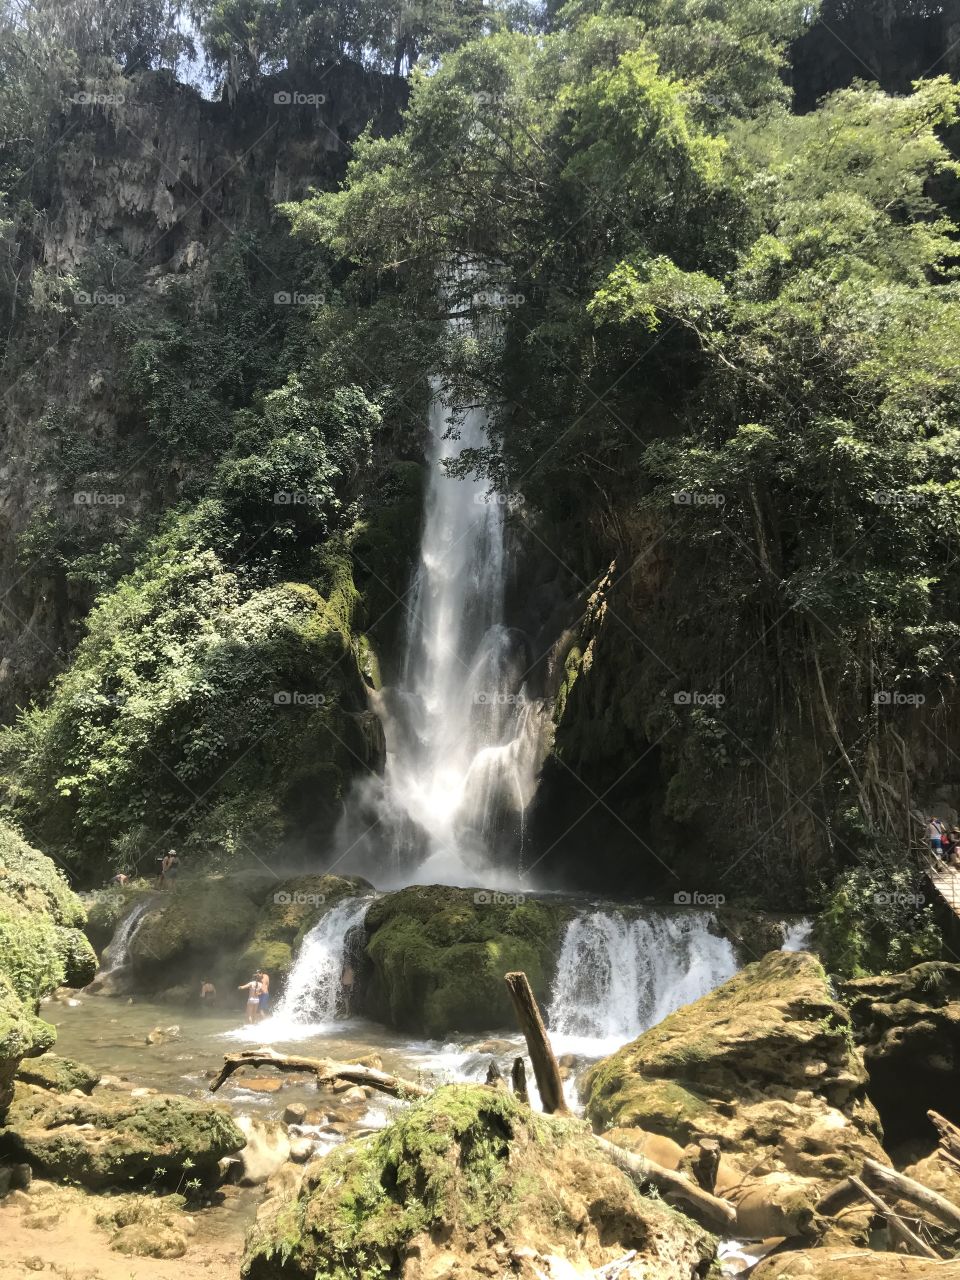 Chasing The Waterfalls